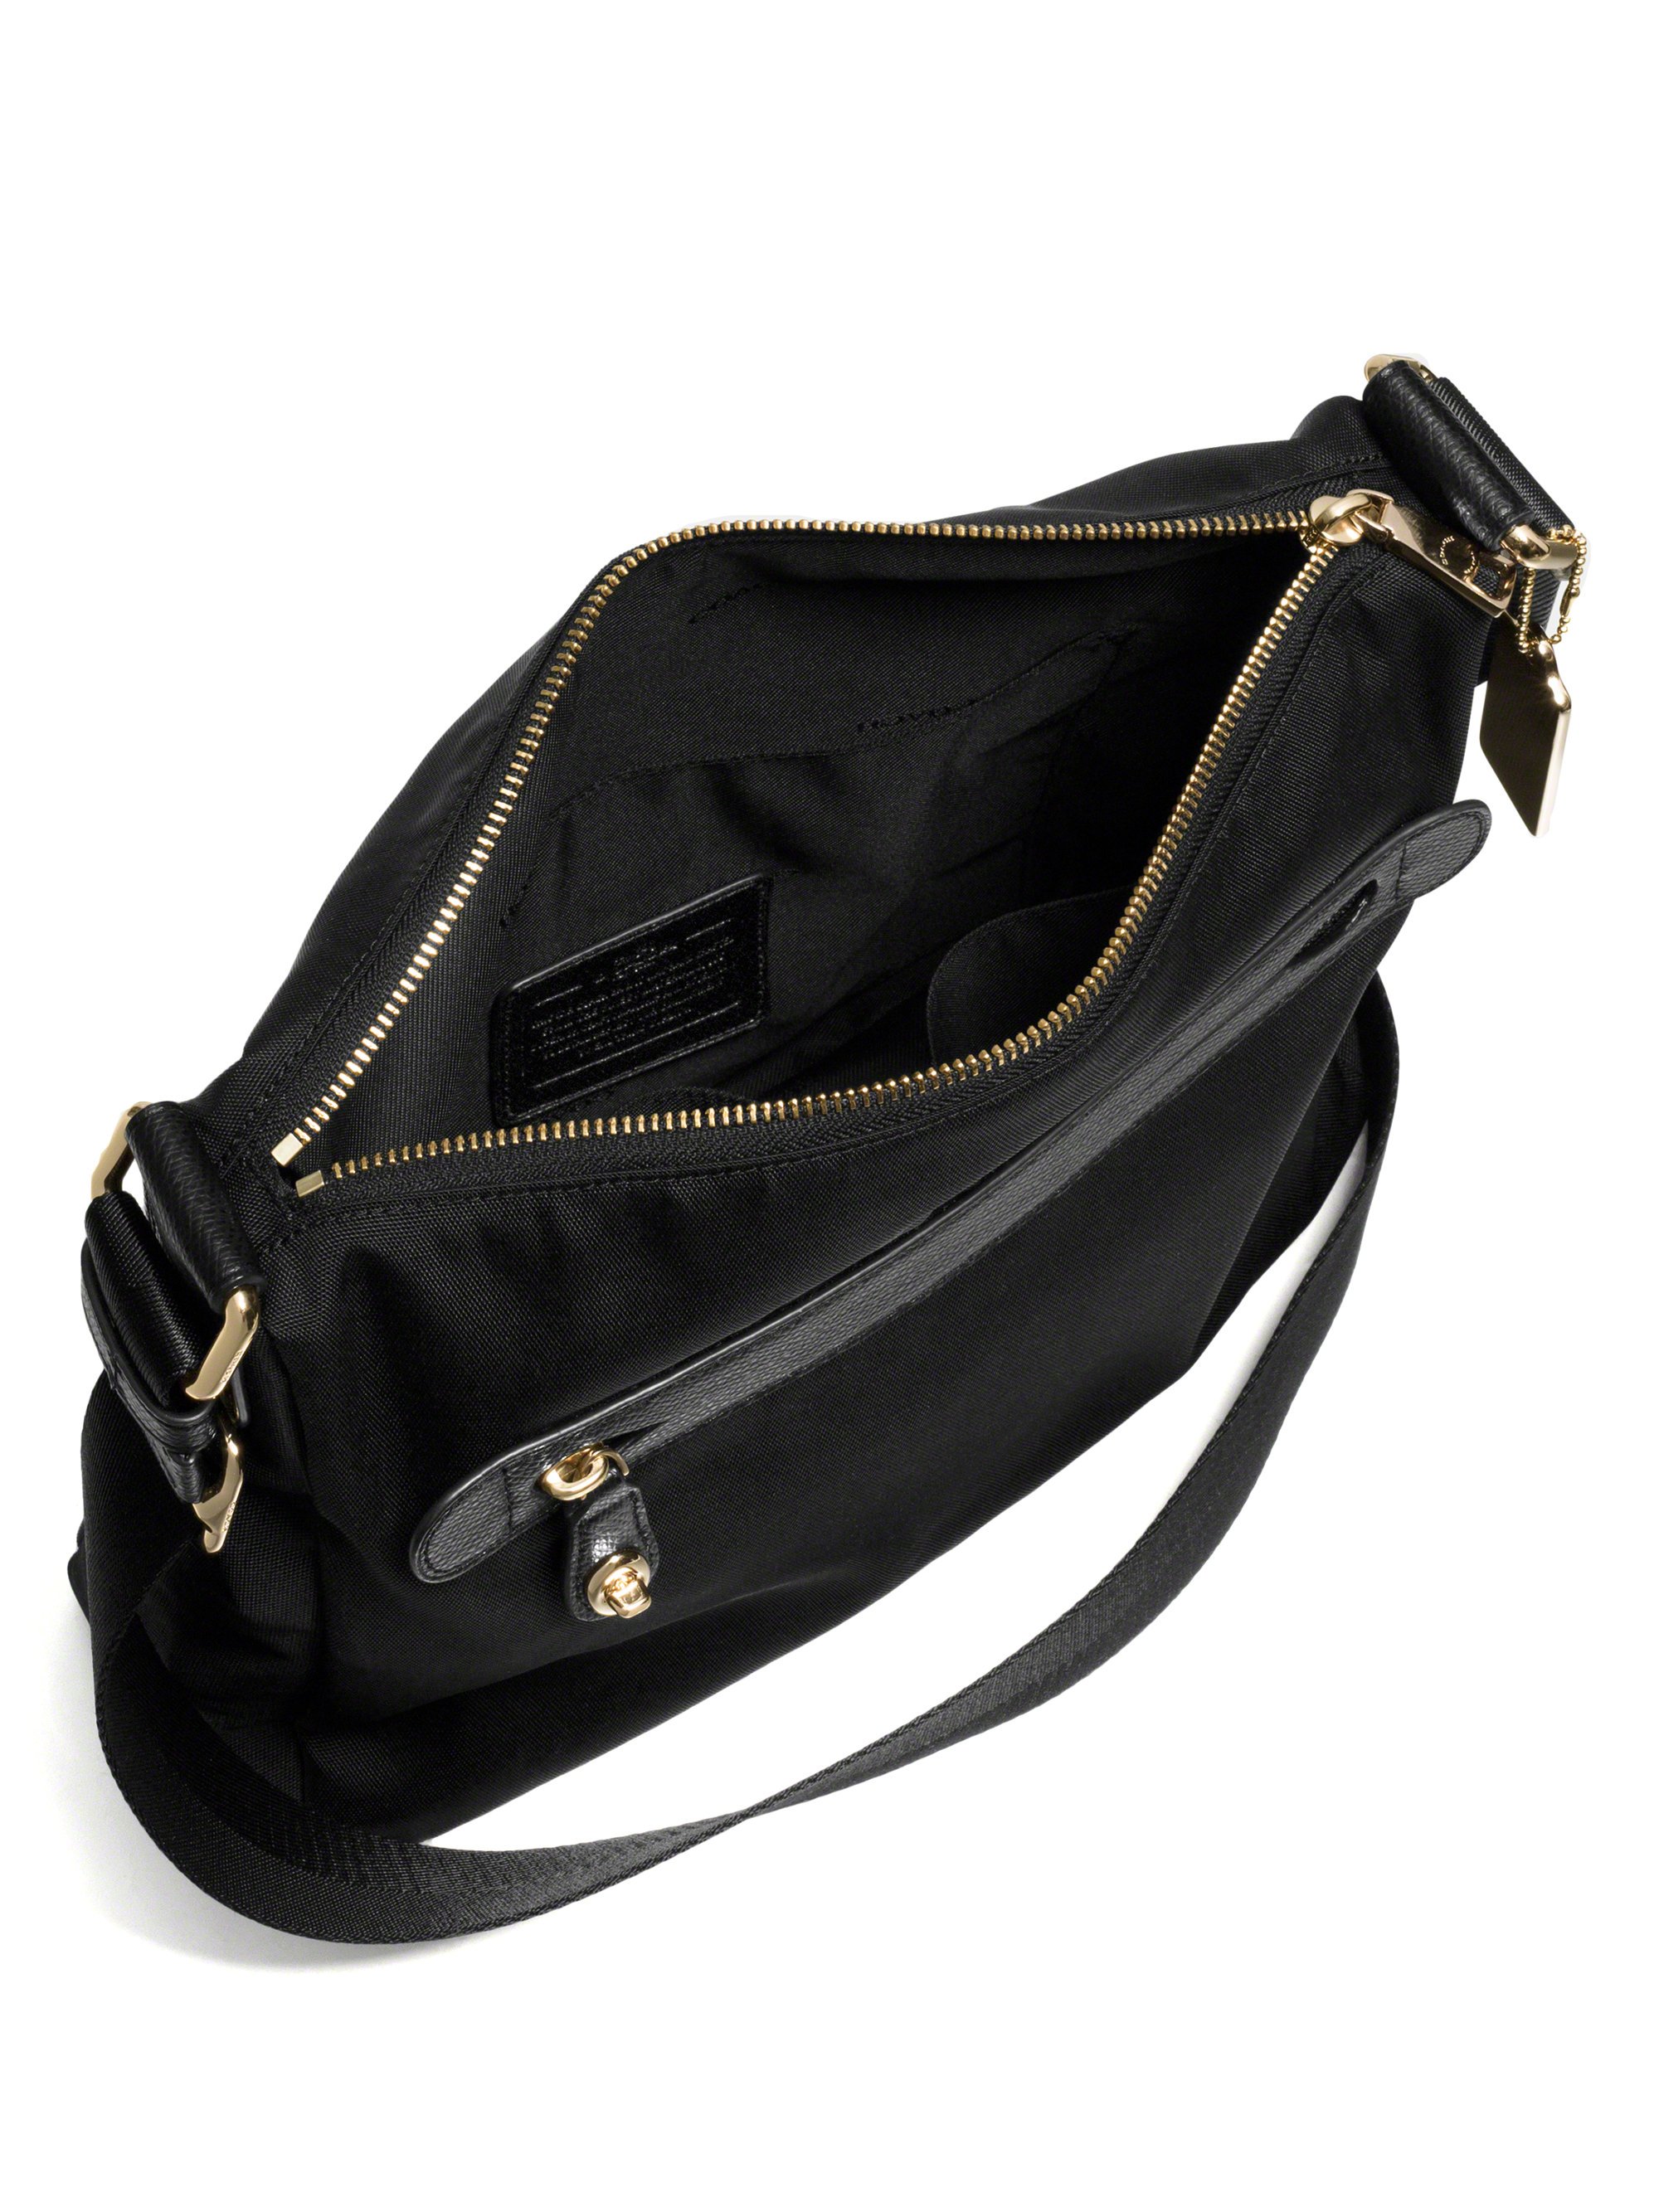 COACH Nylon Crossbody Bag in Black - Lyst